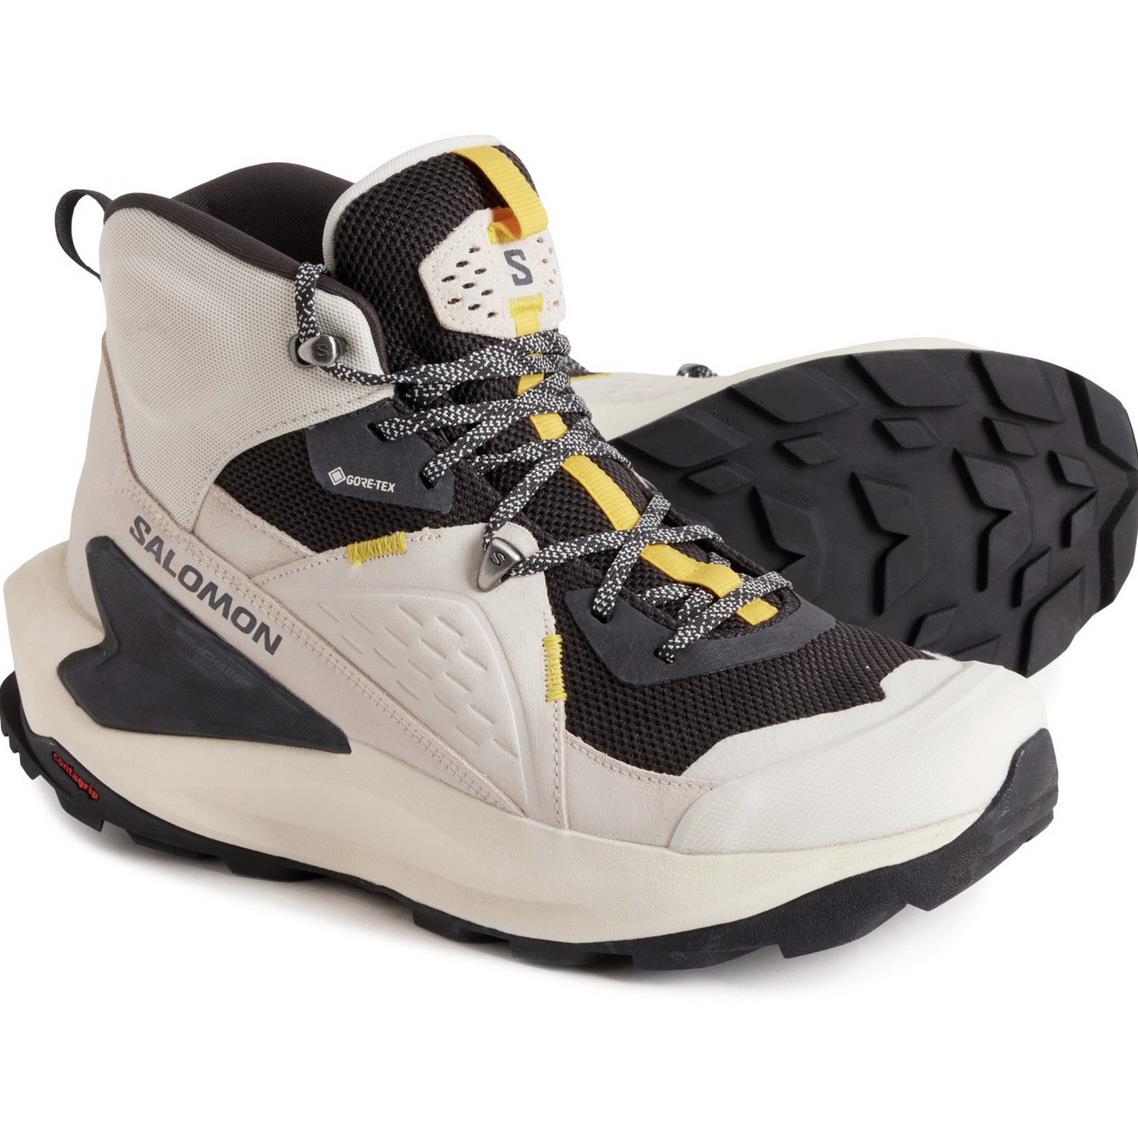 Salomon Men`s Gore-tex Lightweight Hiking Boots - Waterproof Leather